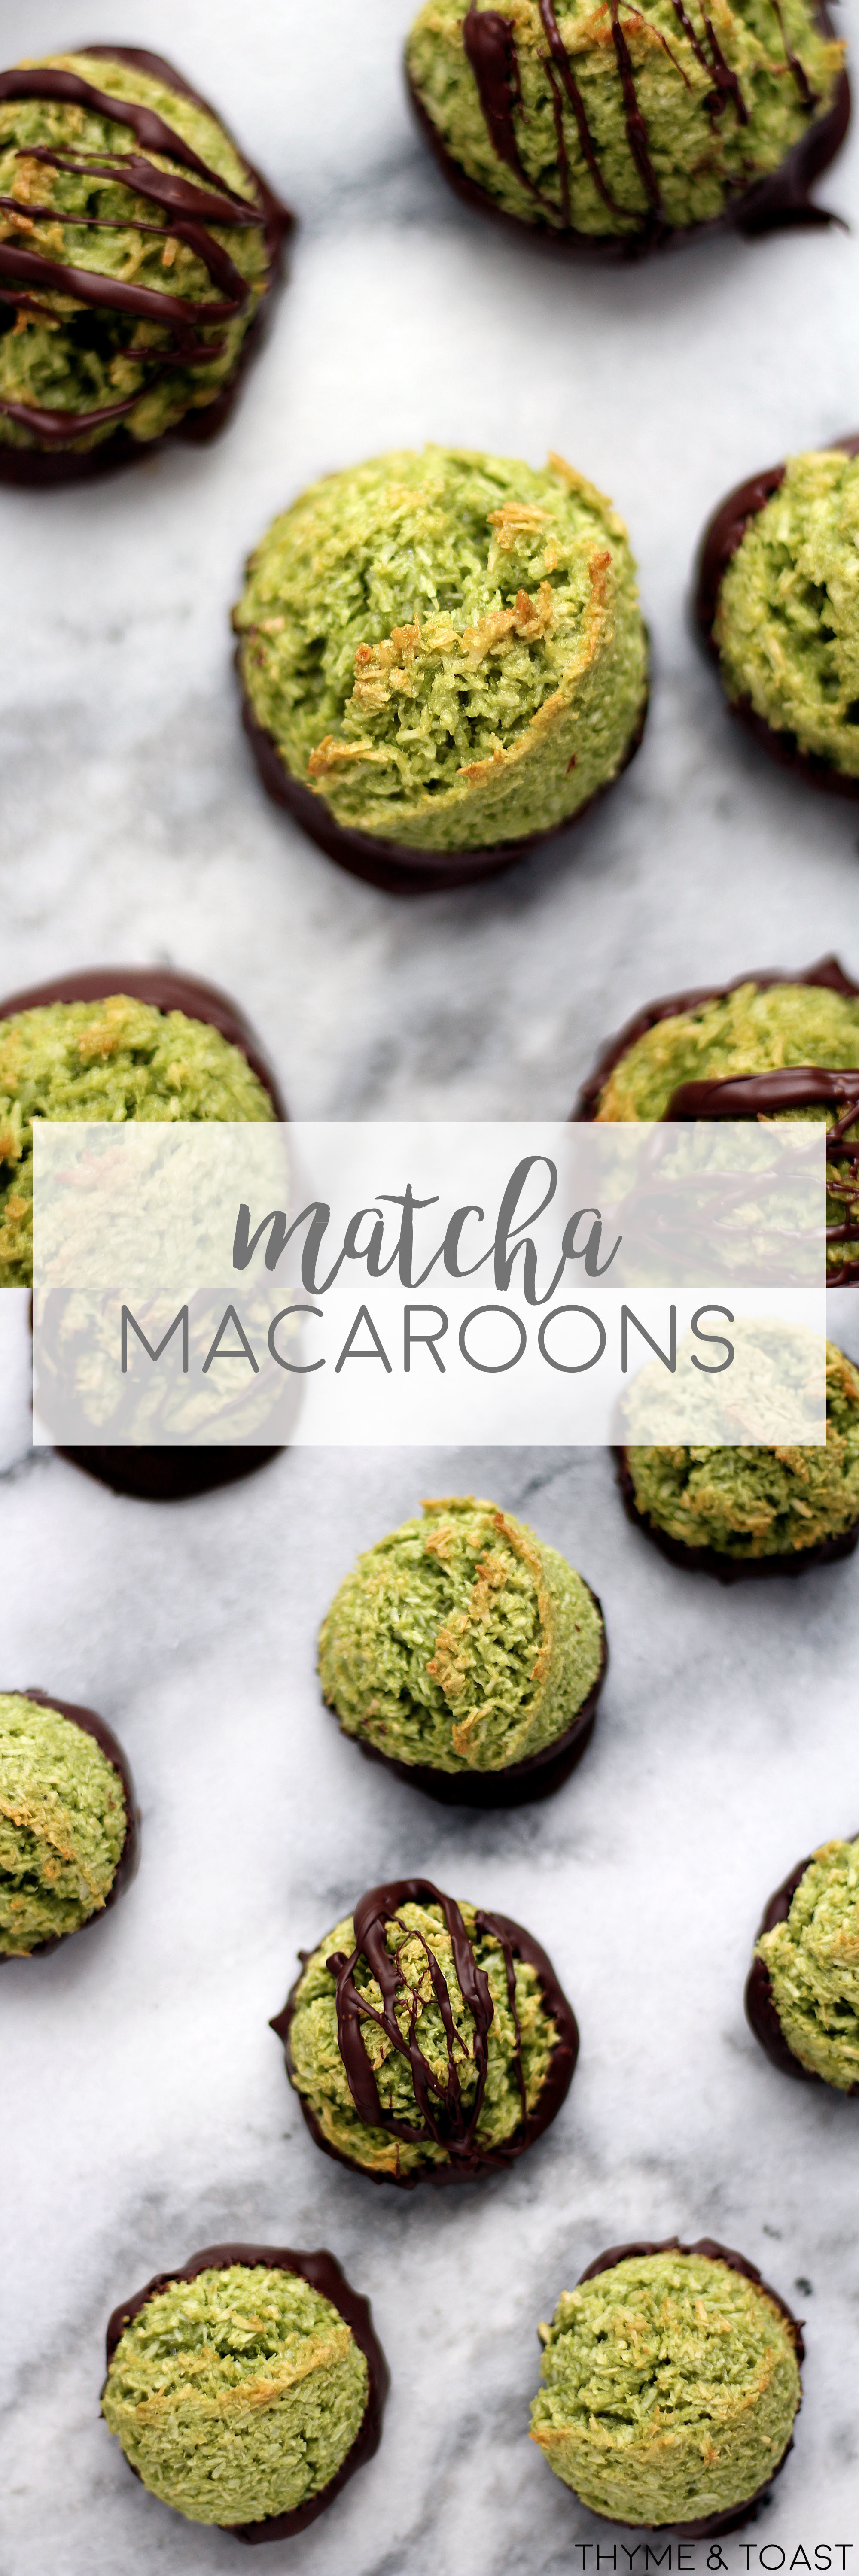 Chocolate Dipped Matcha Macaroons